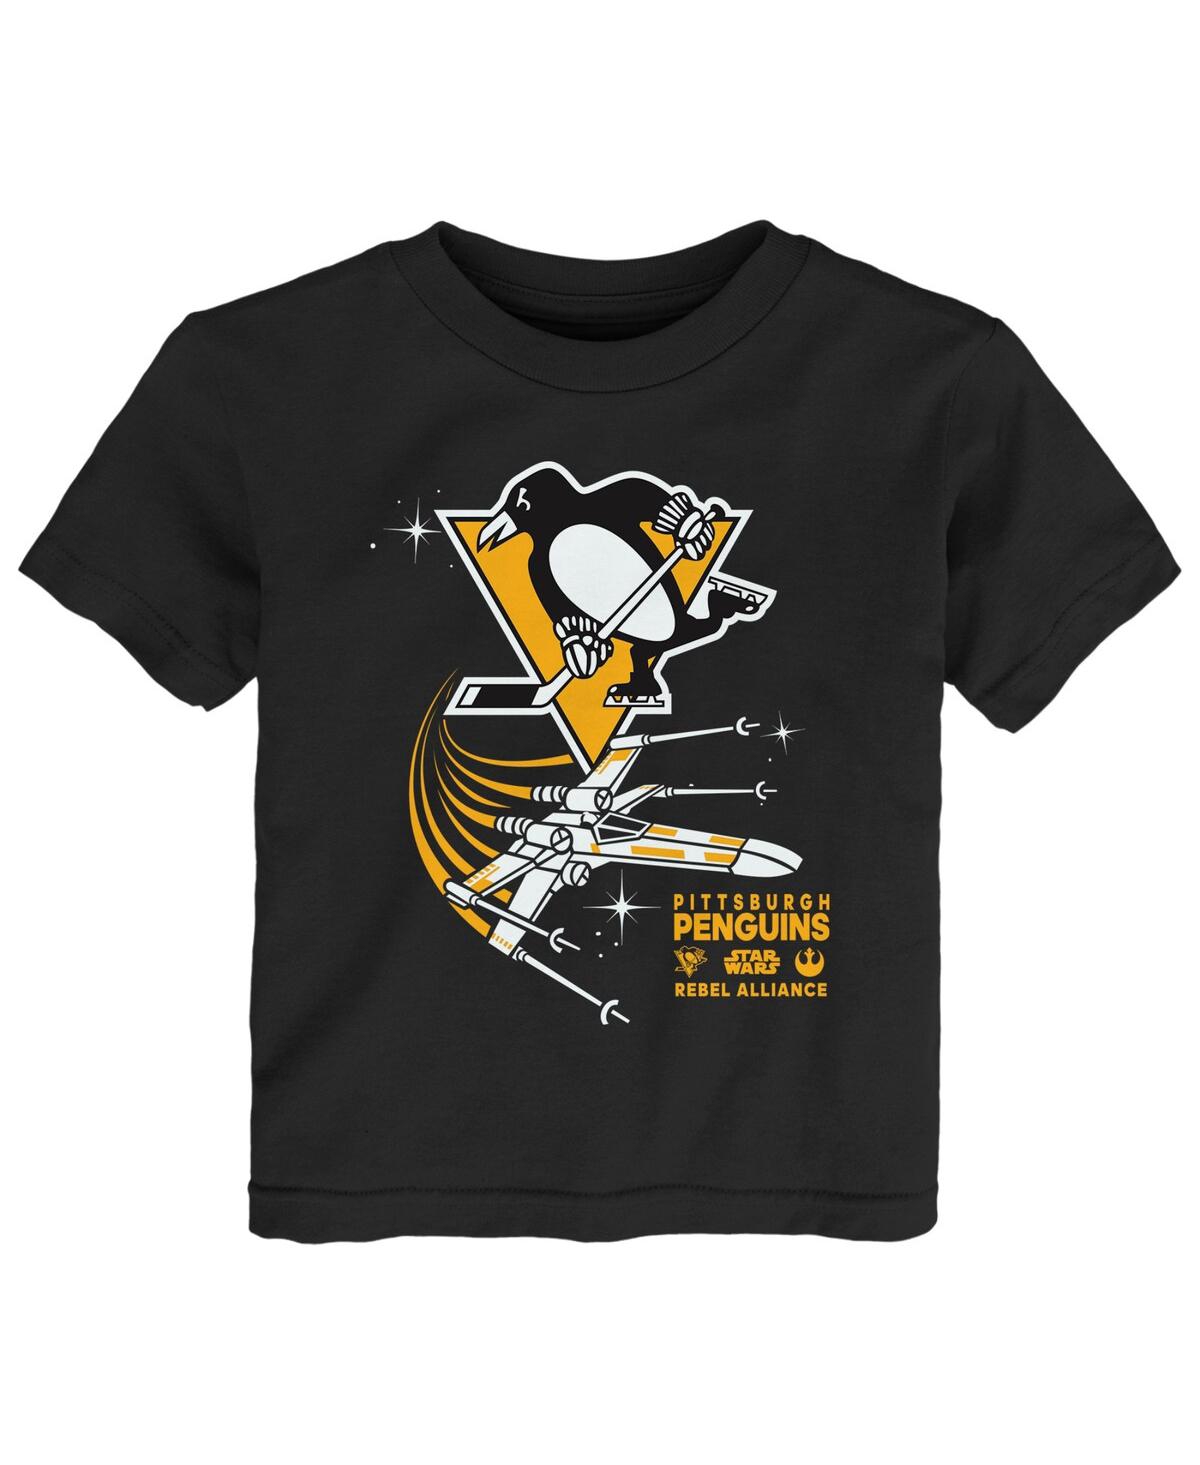 Outerstuff Babies' Toddler Boys And Girls Black Pittsburgh Penguins Star Wars Rebel Alliance T-shirt